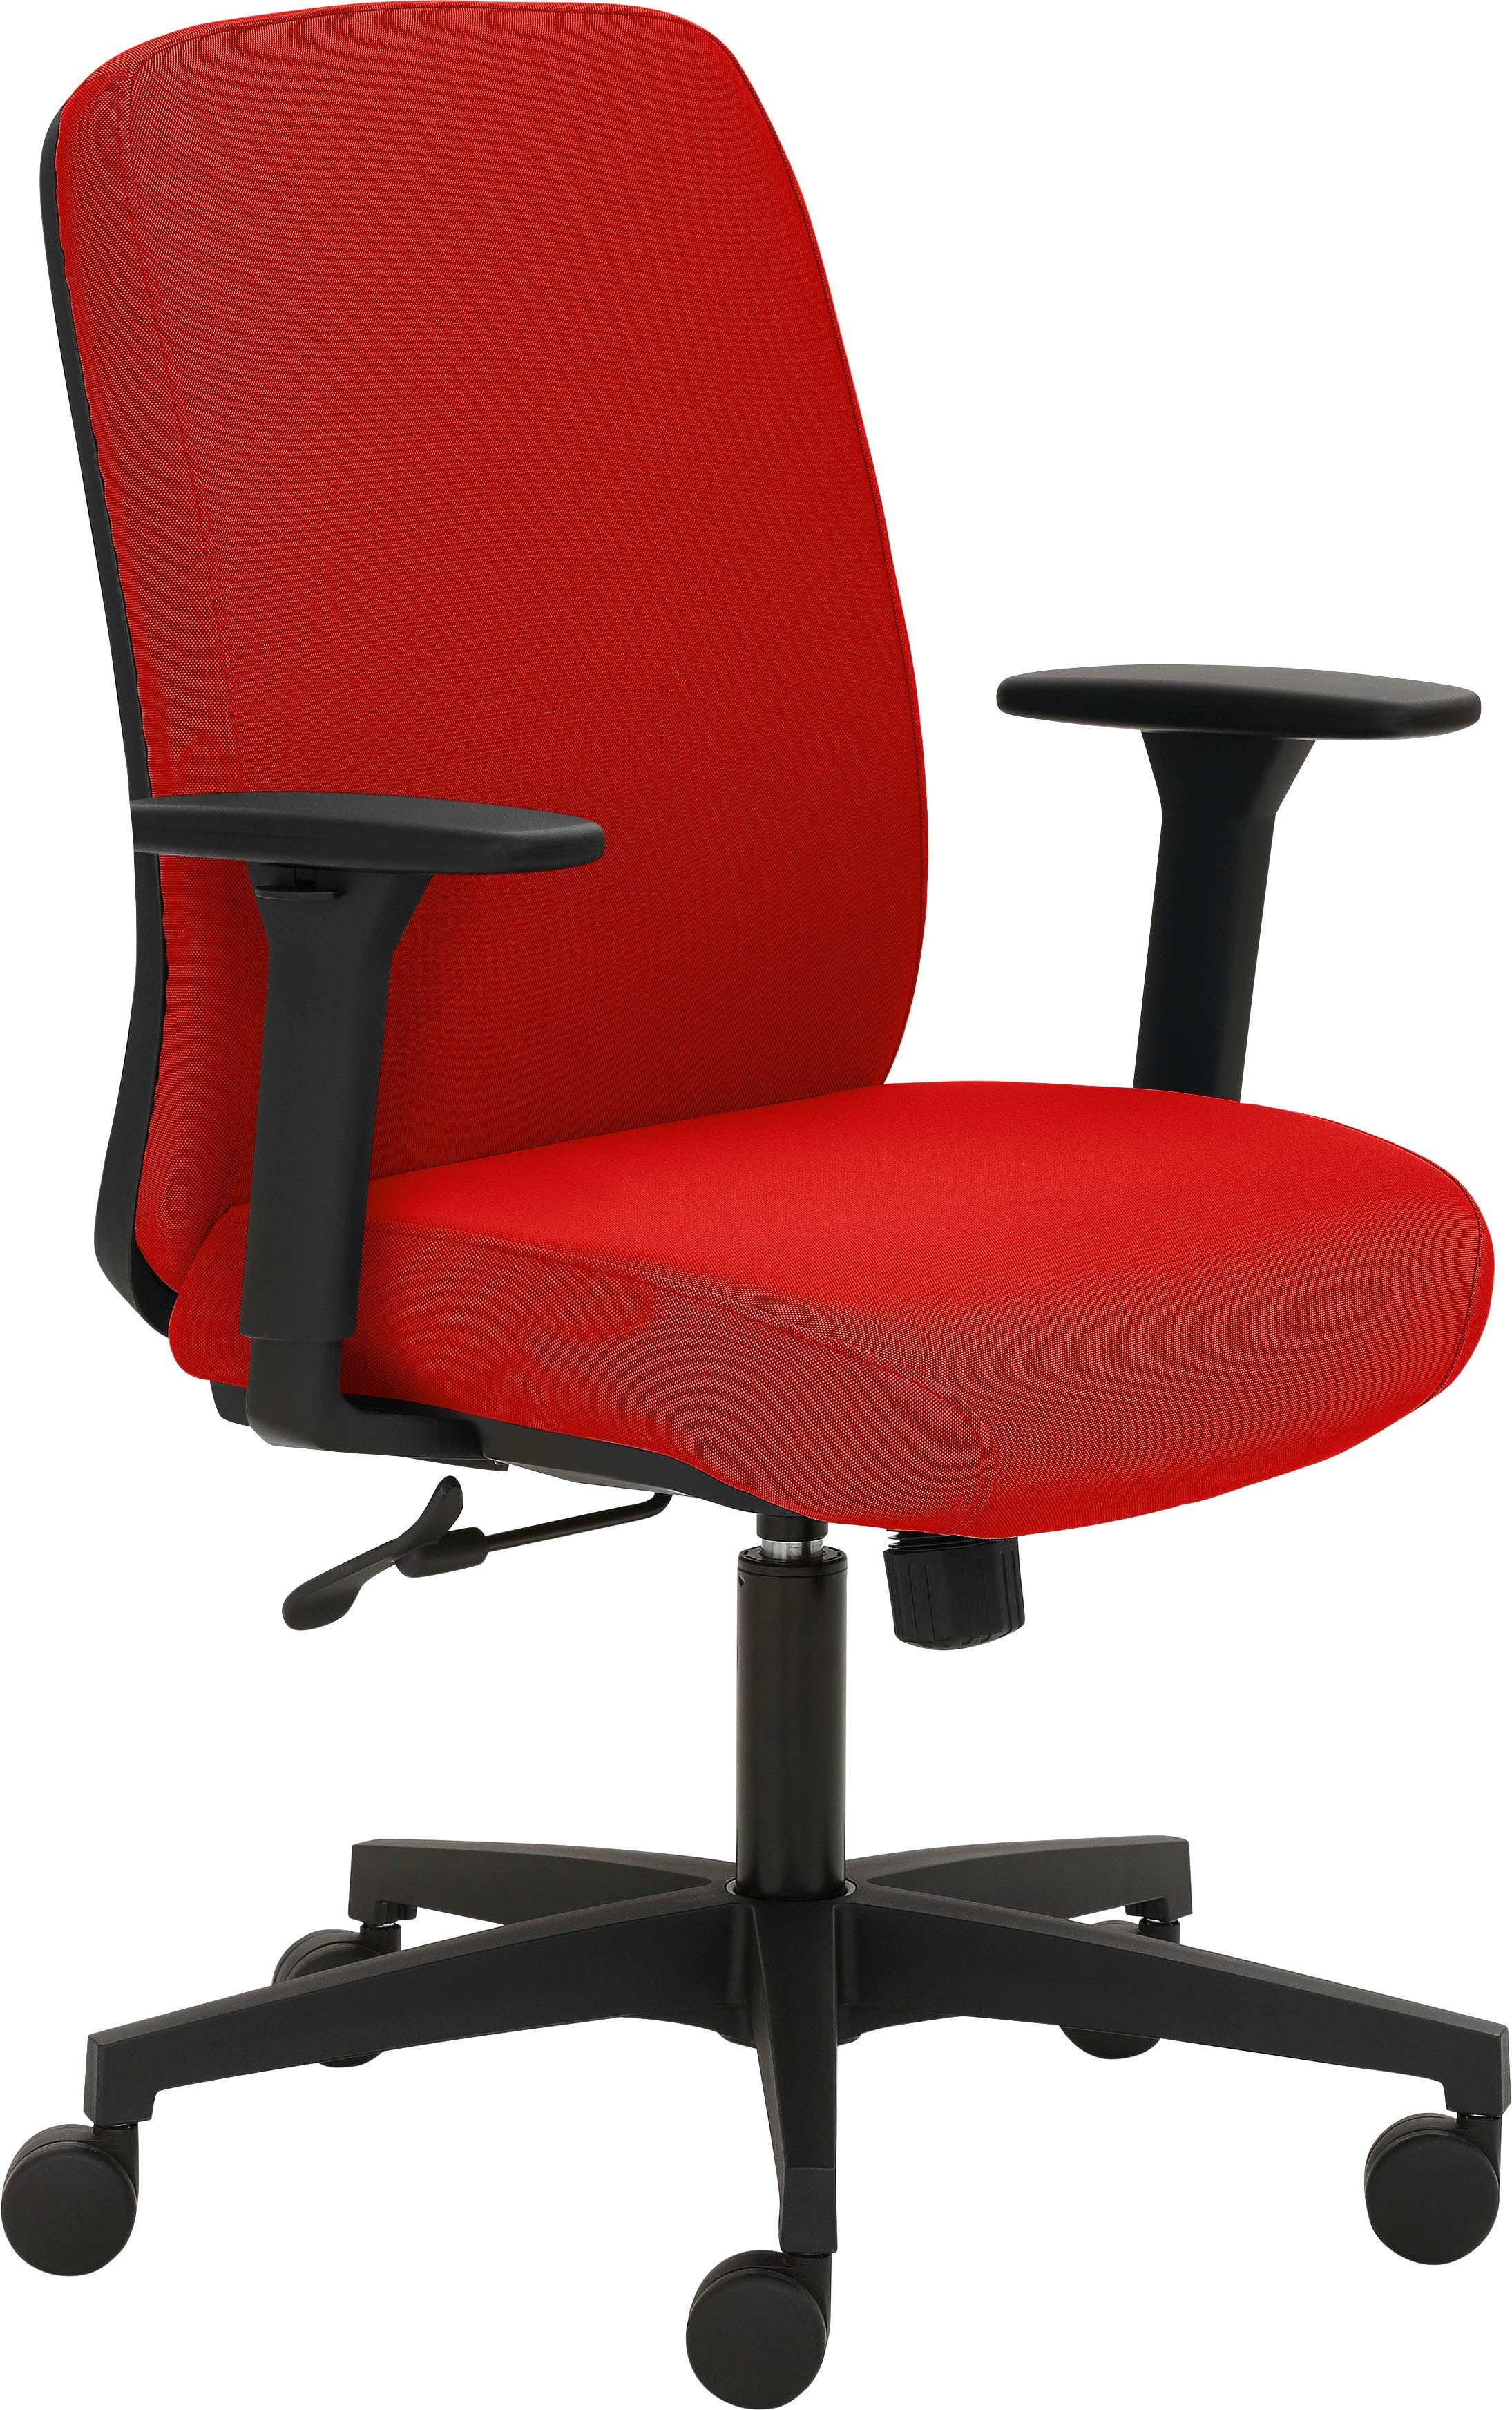 Sitzkomfort für maximalen Kirschrot | GS-zertifiziert, Mayer Sitzmöbel 2219, extra Kirschrot starke Drehstuhl Polsterung